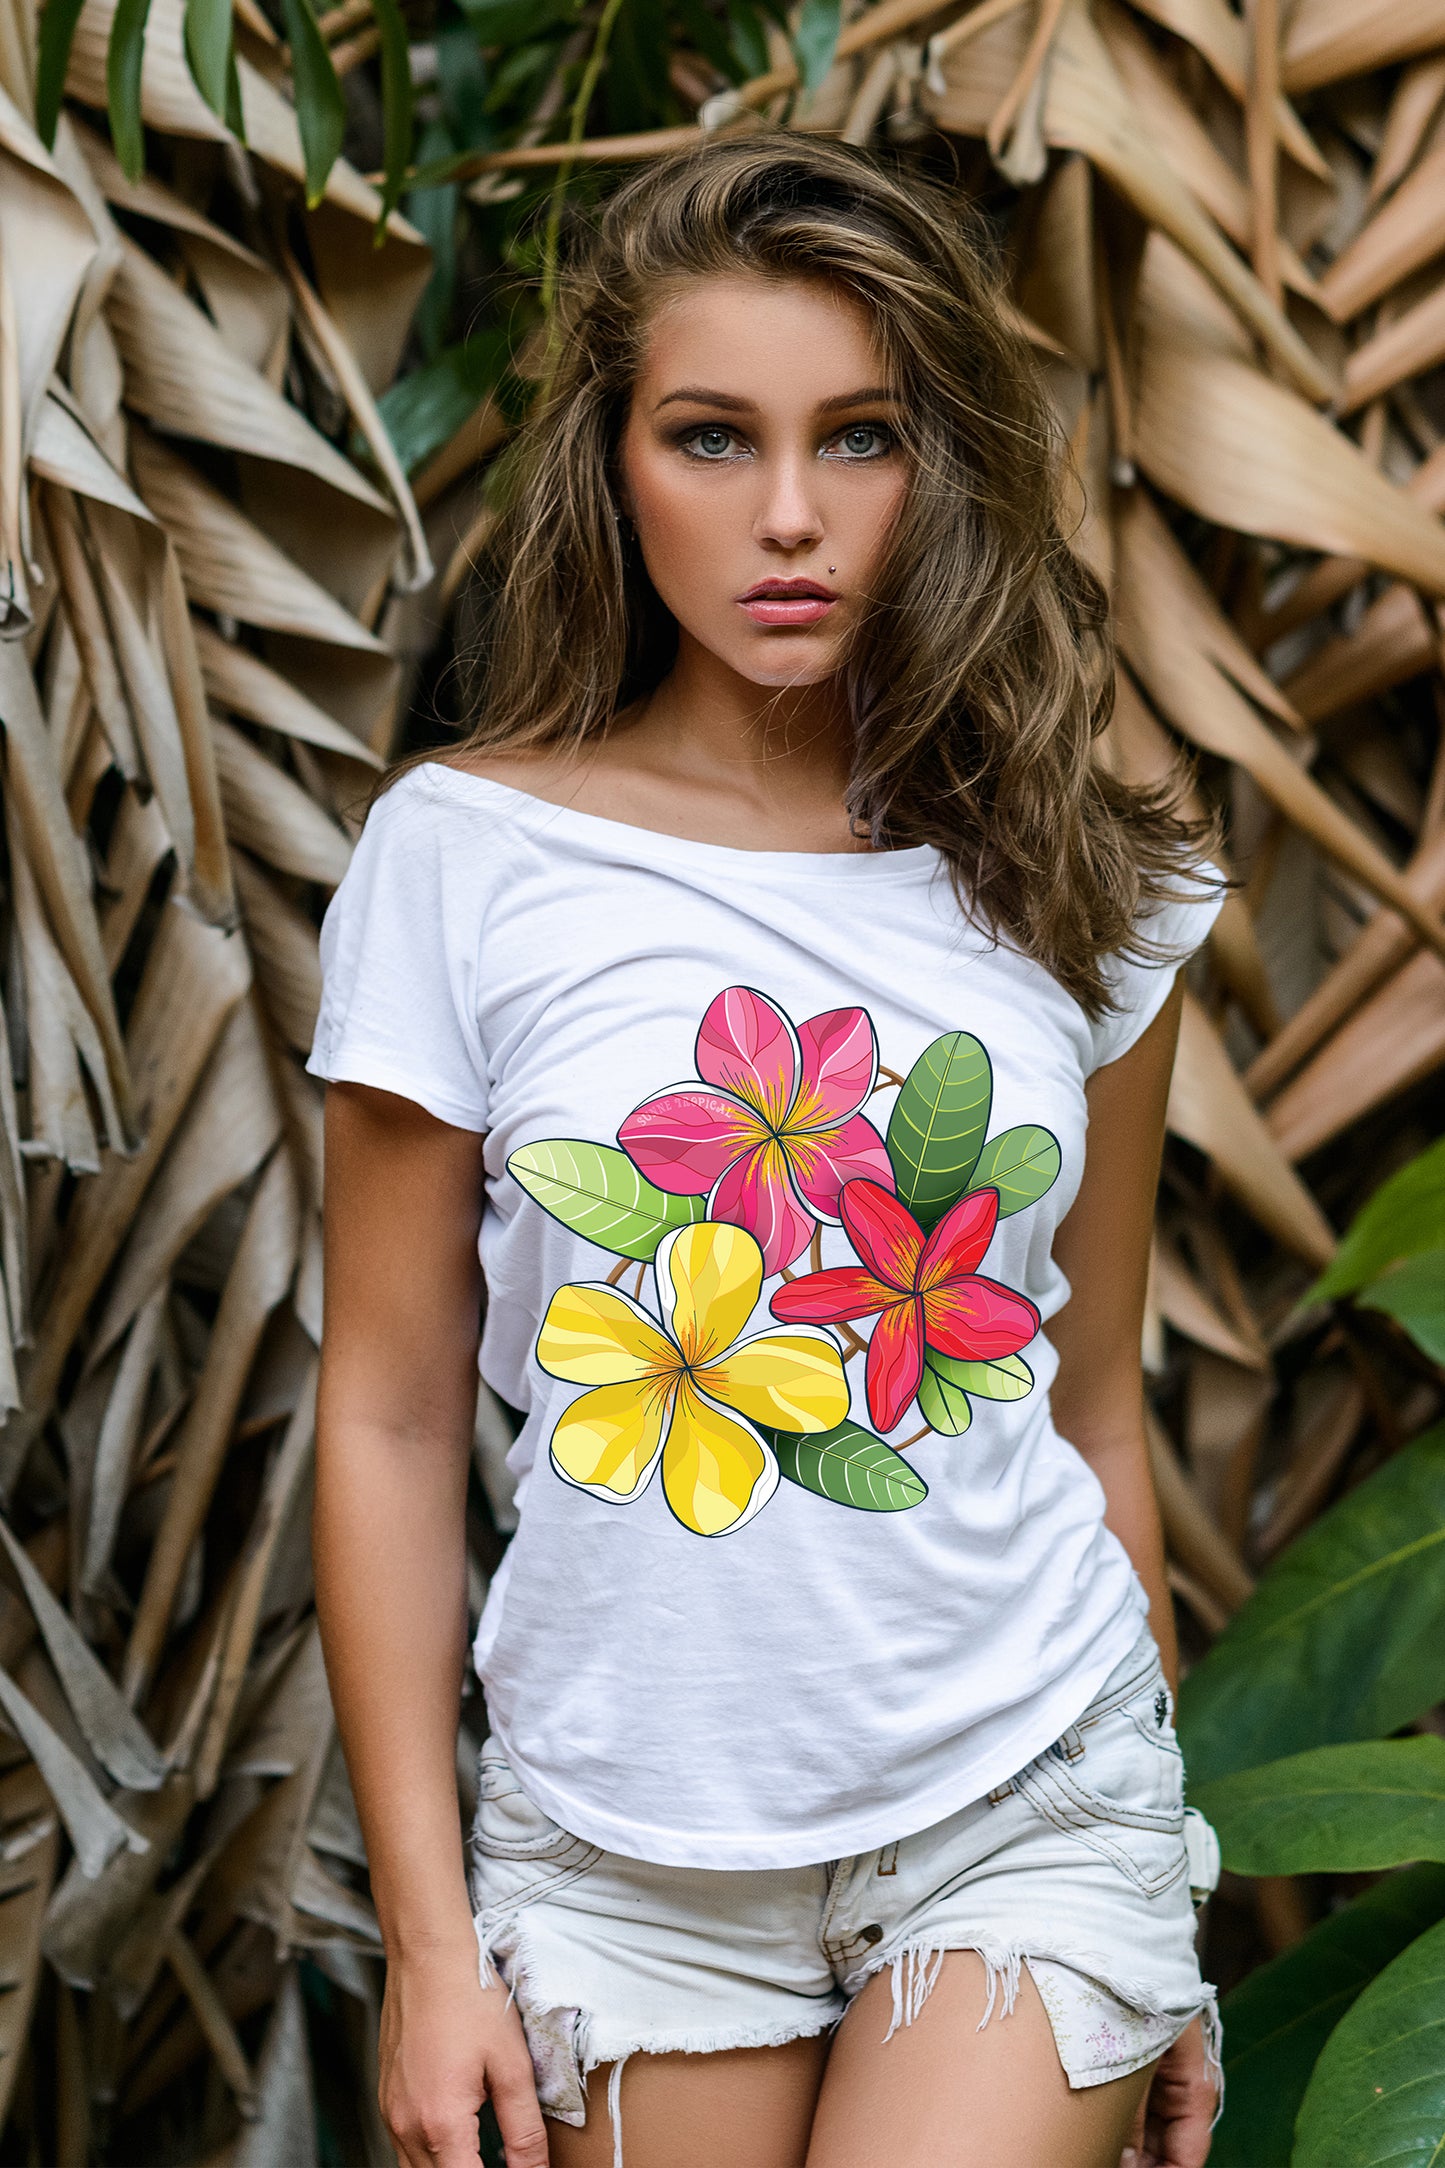 Sunne Tropical Women Top Tee White Loose Fit T-Shirt - Super Soft Light Weight Polyester Spandex - Hawaiian Plumeria